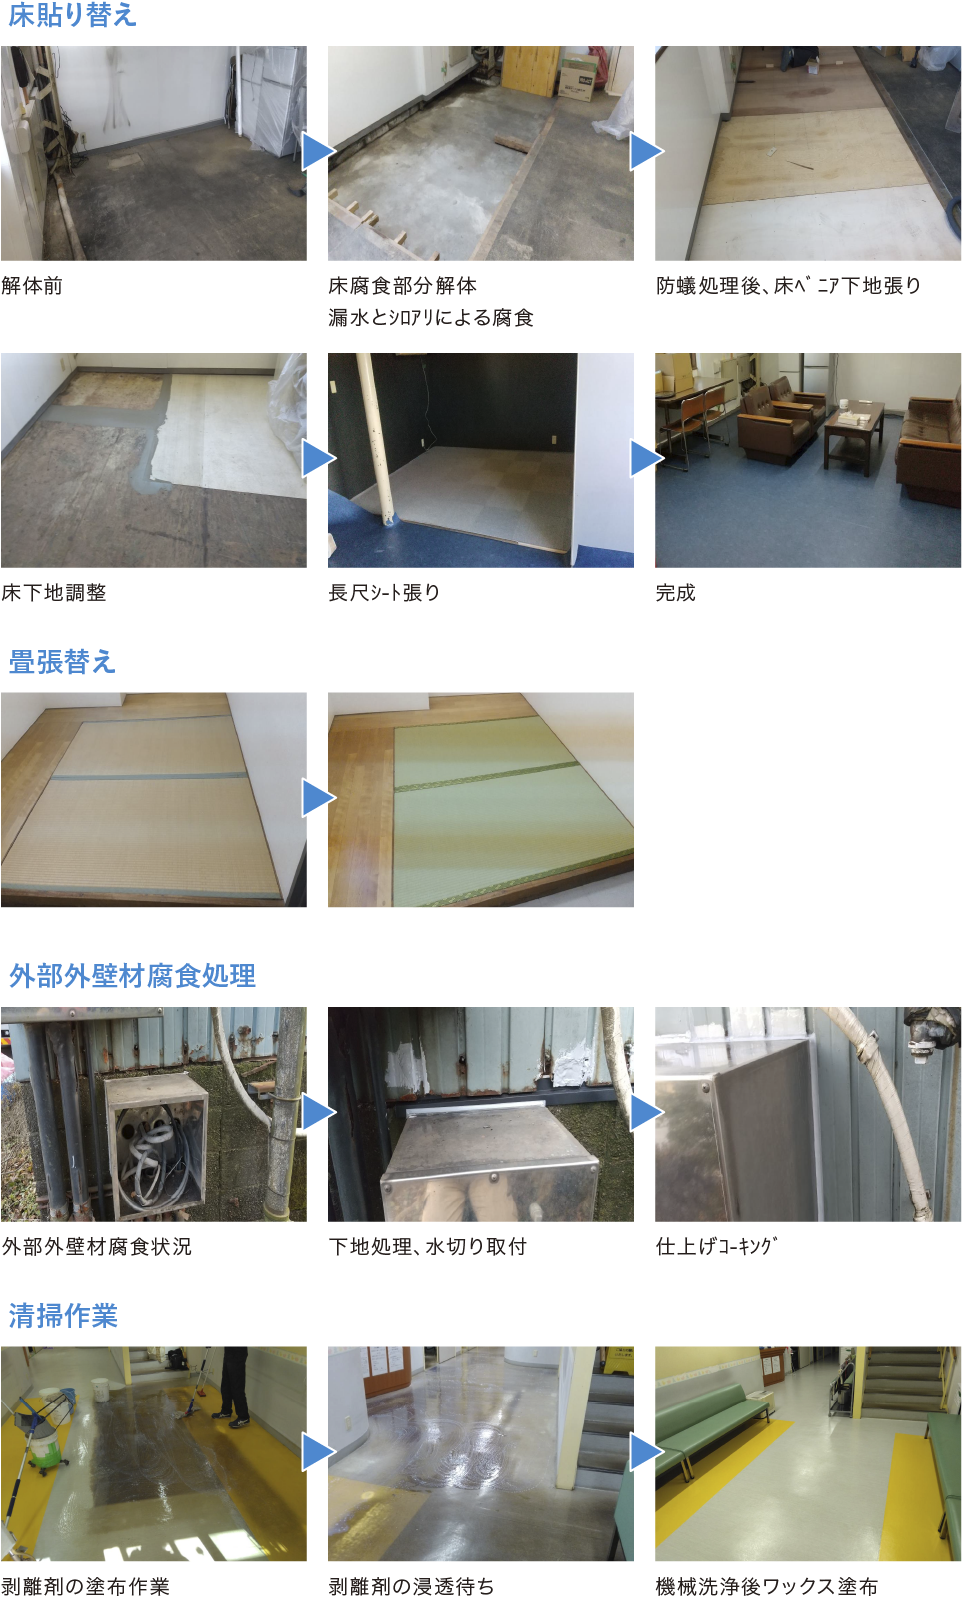 床貼り替え/畳張替え/清掃作業/外部外壁材腐食処理